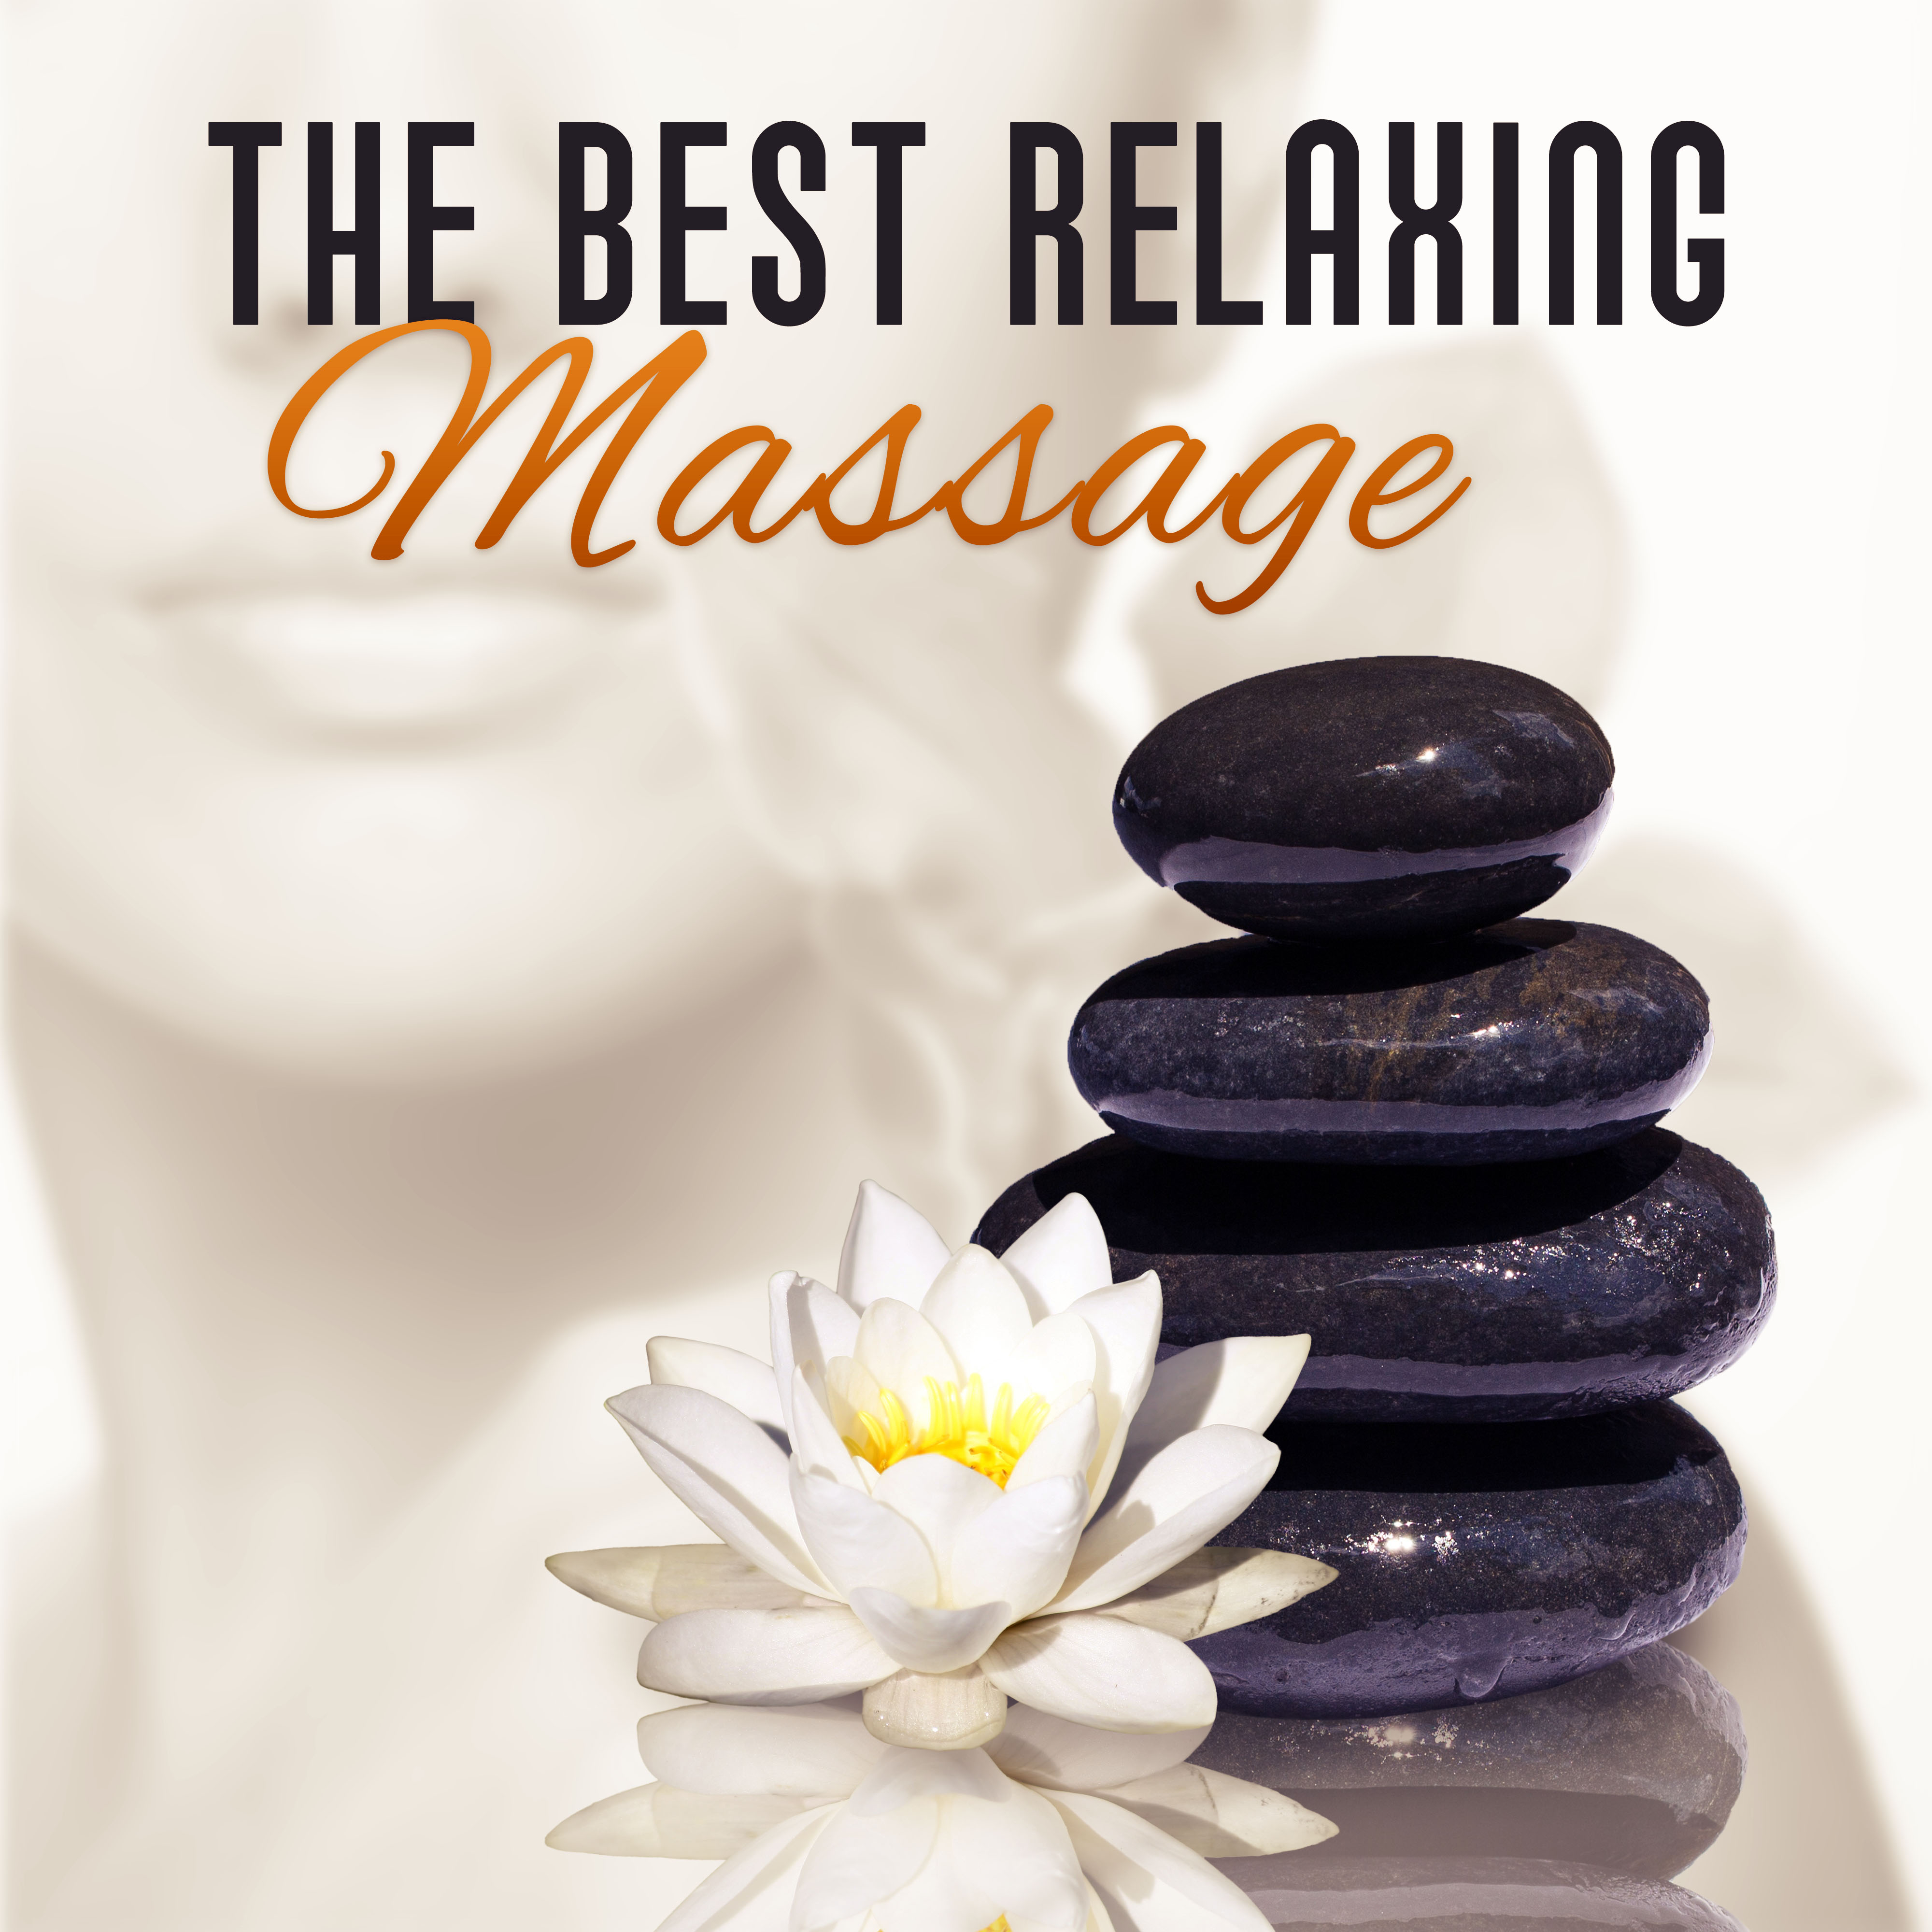 The Best Relaxing Massage